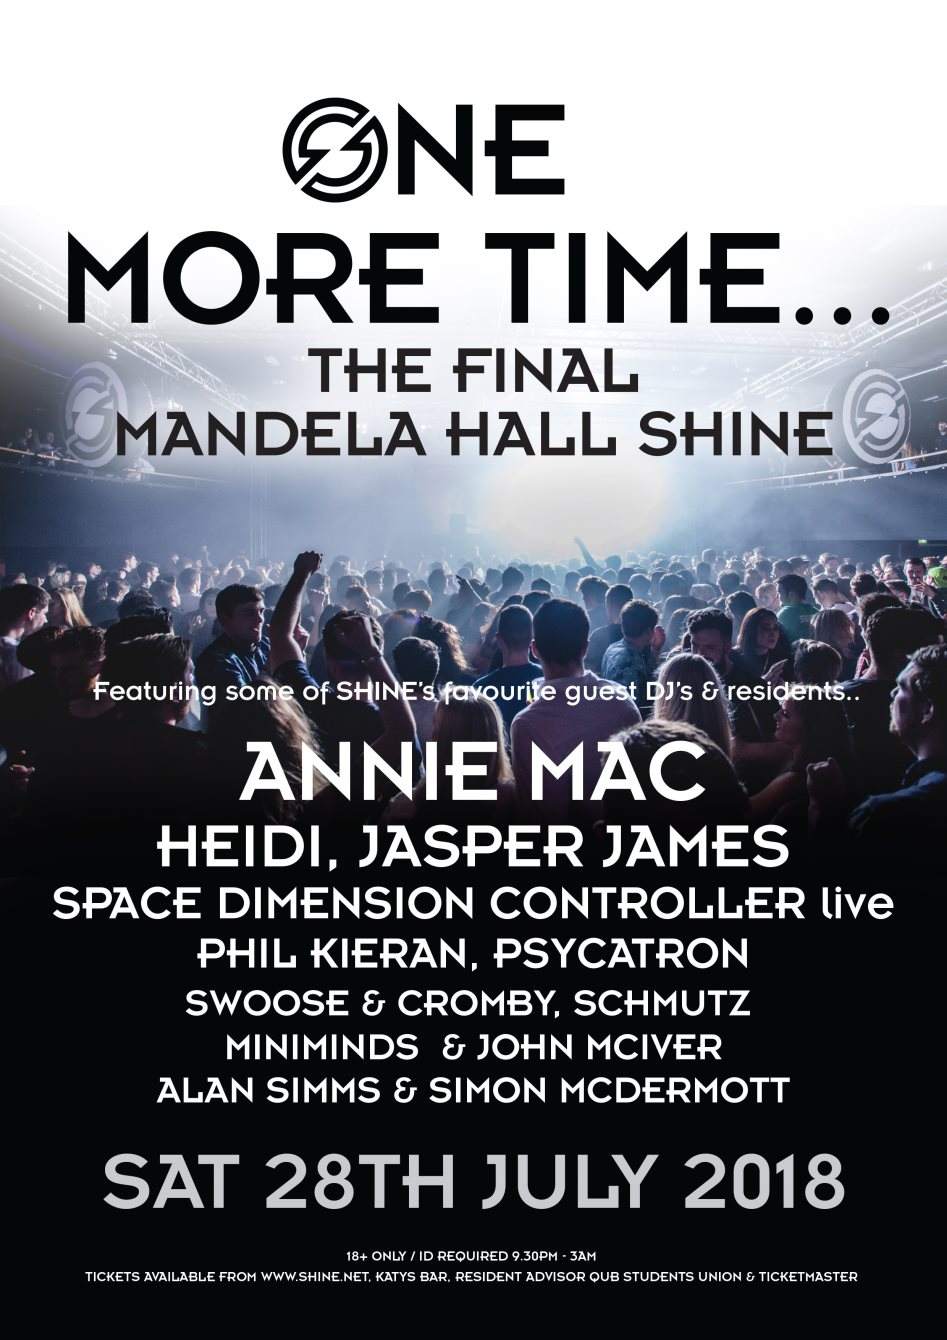 One More Time.. The Final Mandela Hall Shine with Annie Mac, Heidi, Jasper James & More - フライヤー表